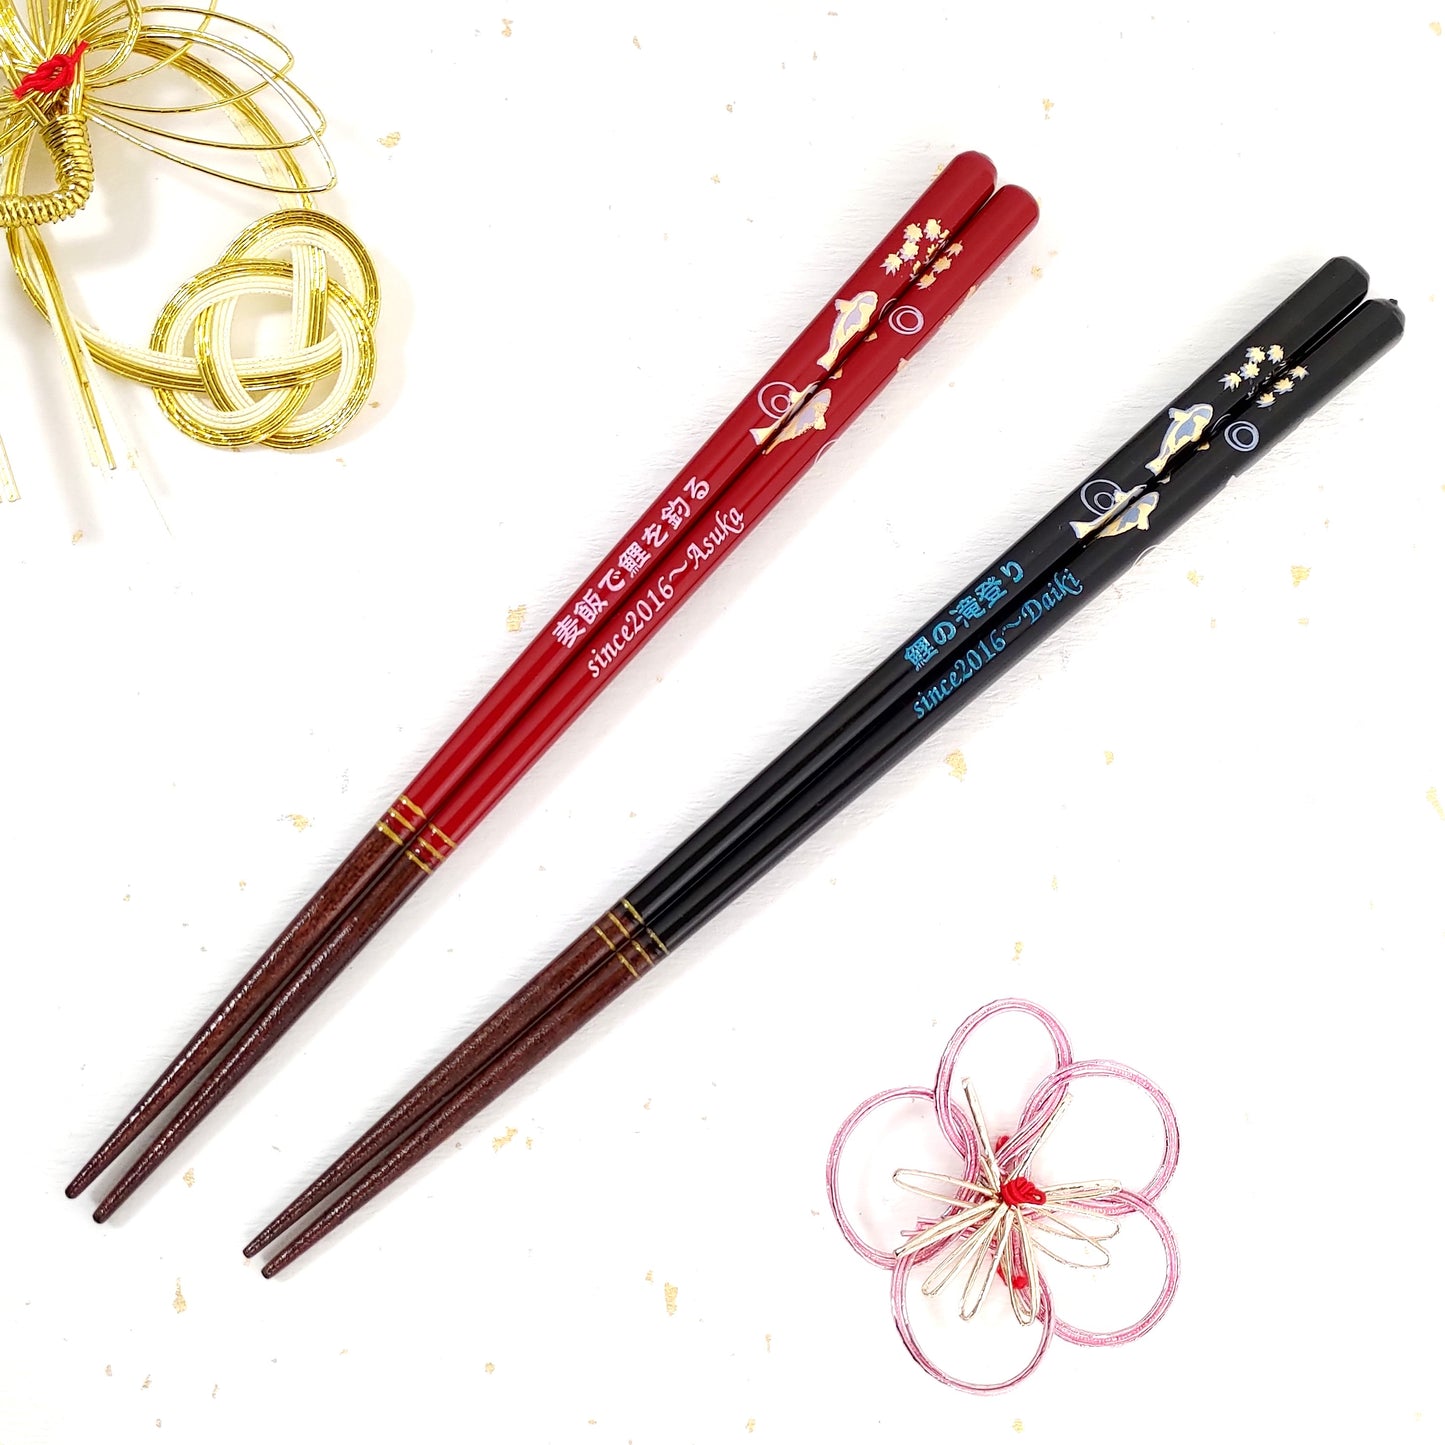 Swimming Carp Japanese chopsticks black red - SINGLE PAIR